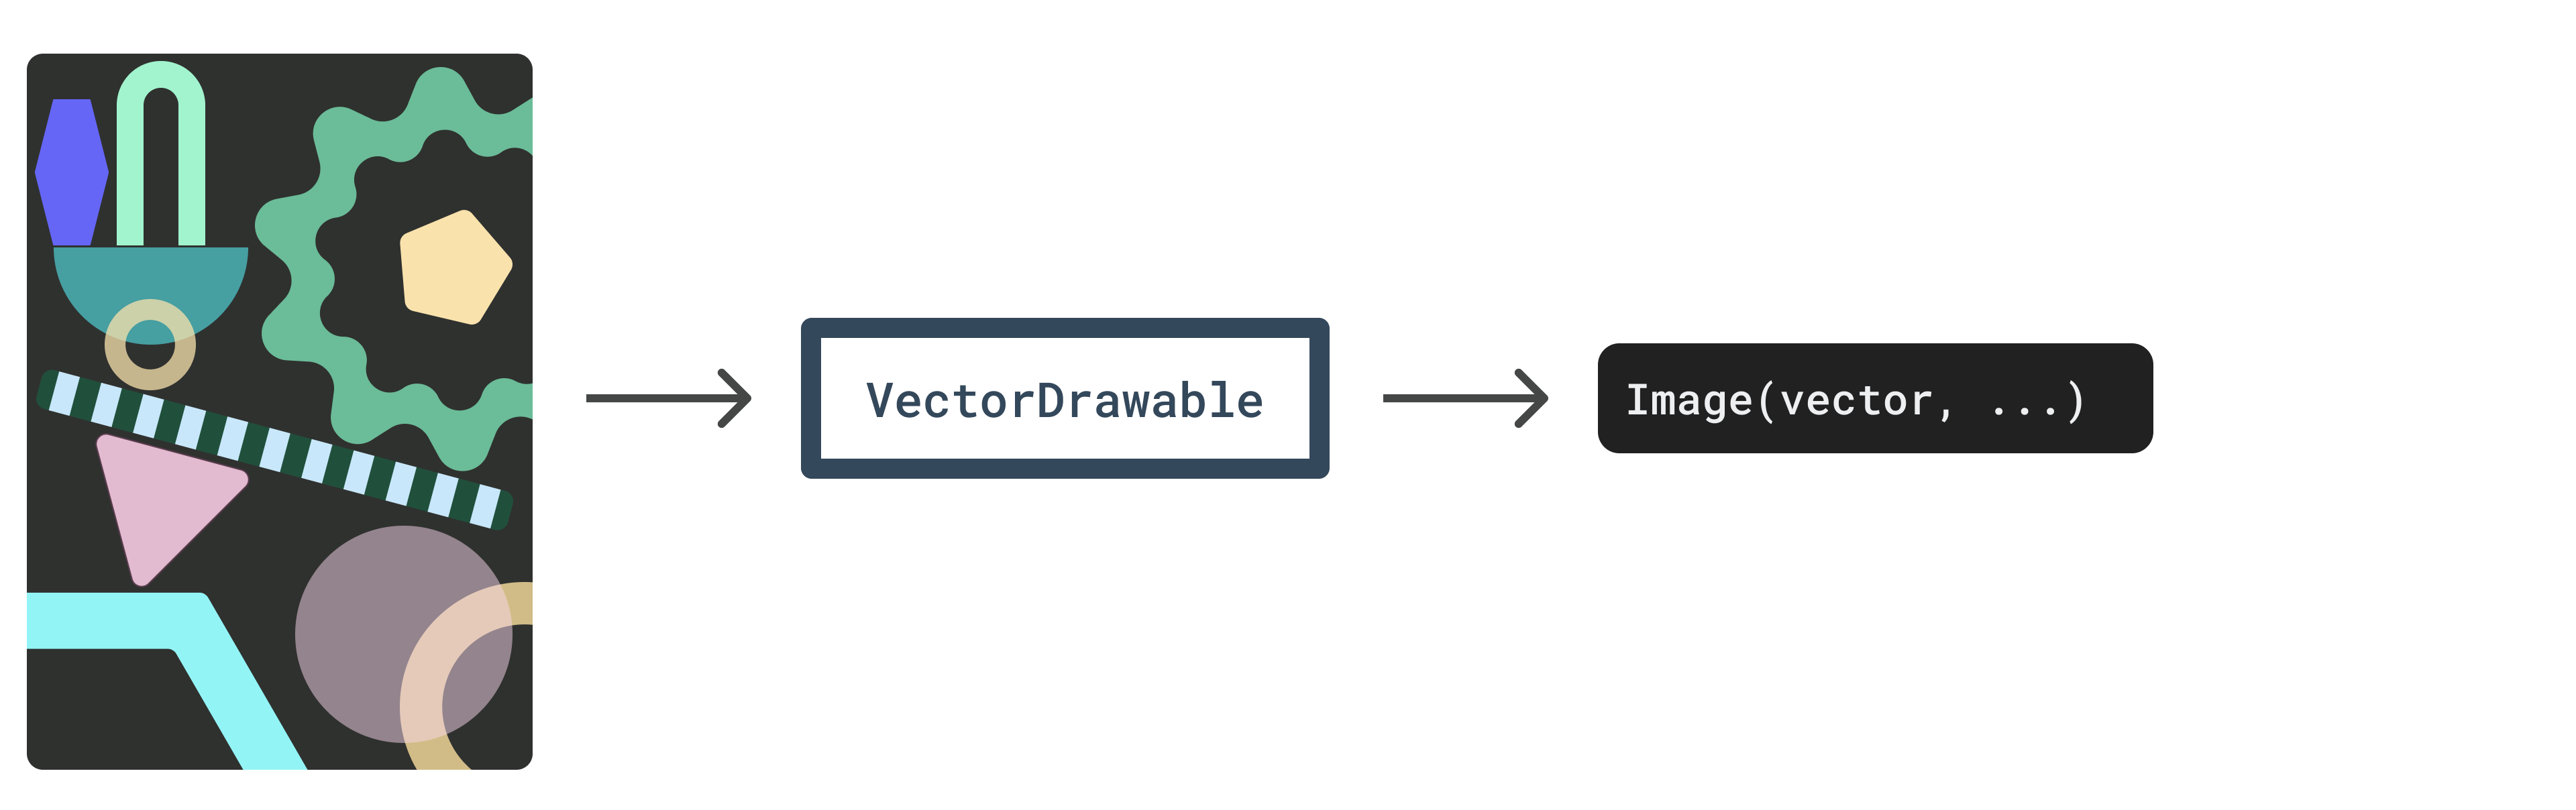 Diagramme – Calques vectoriels en VectorDrawable, puis en image